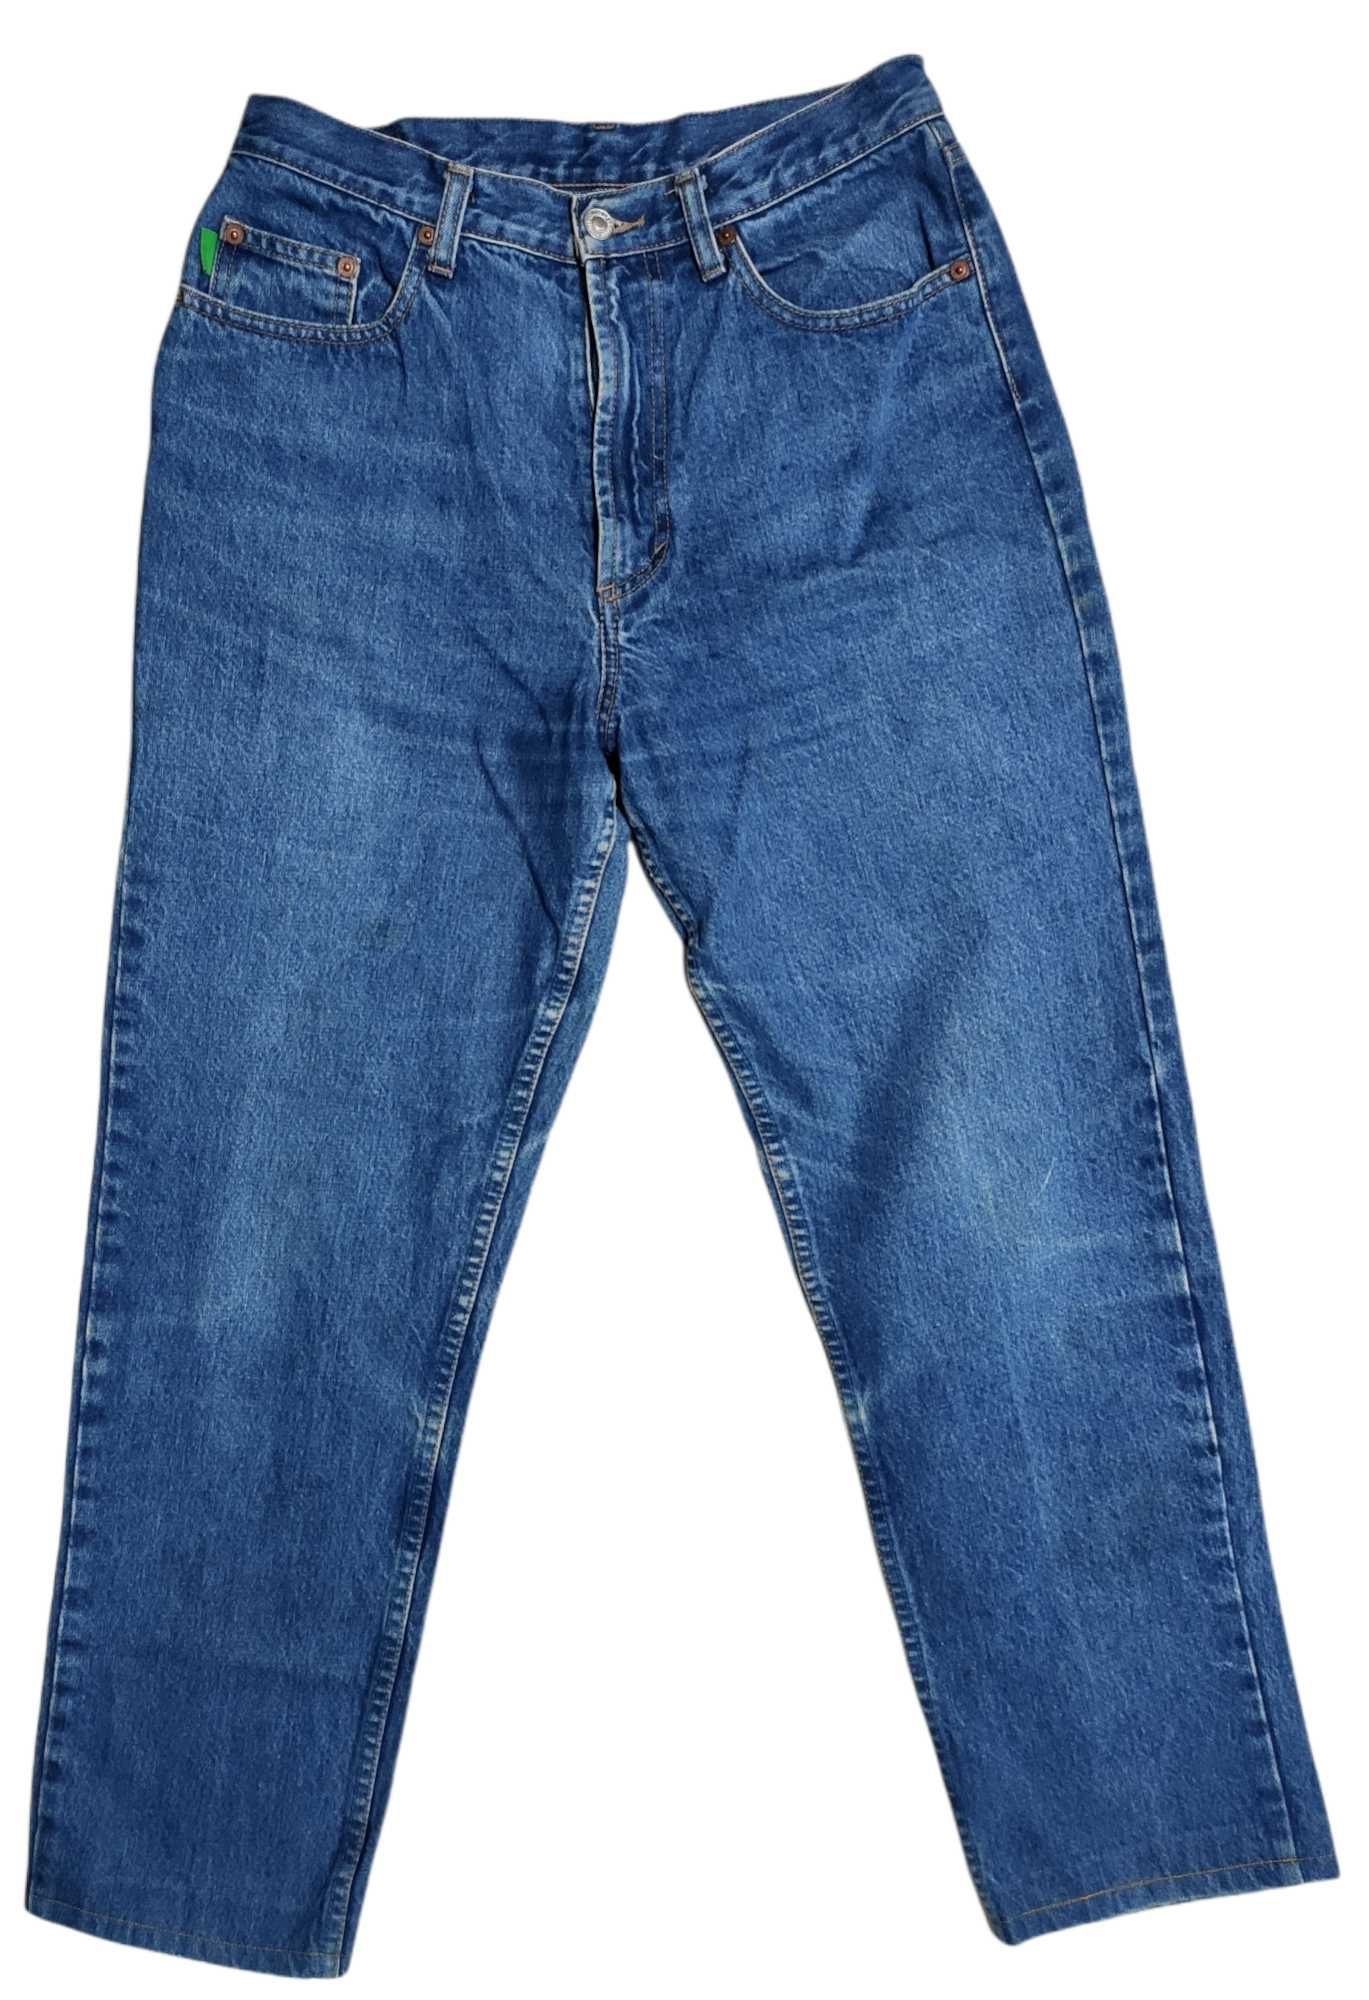 jeansy spodnie United Colors of Benneton, rozmiar W31/L33